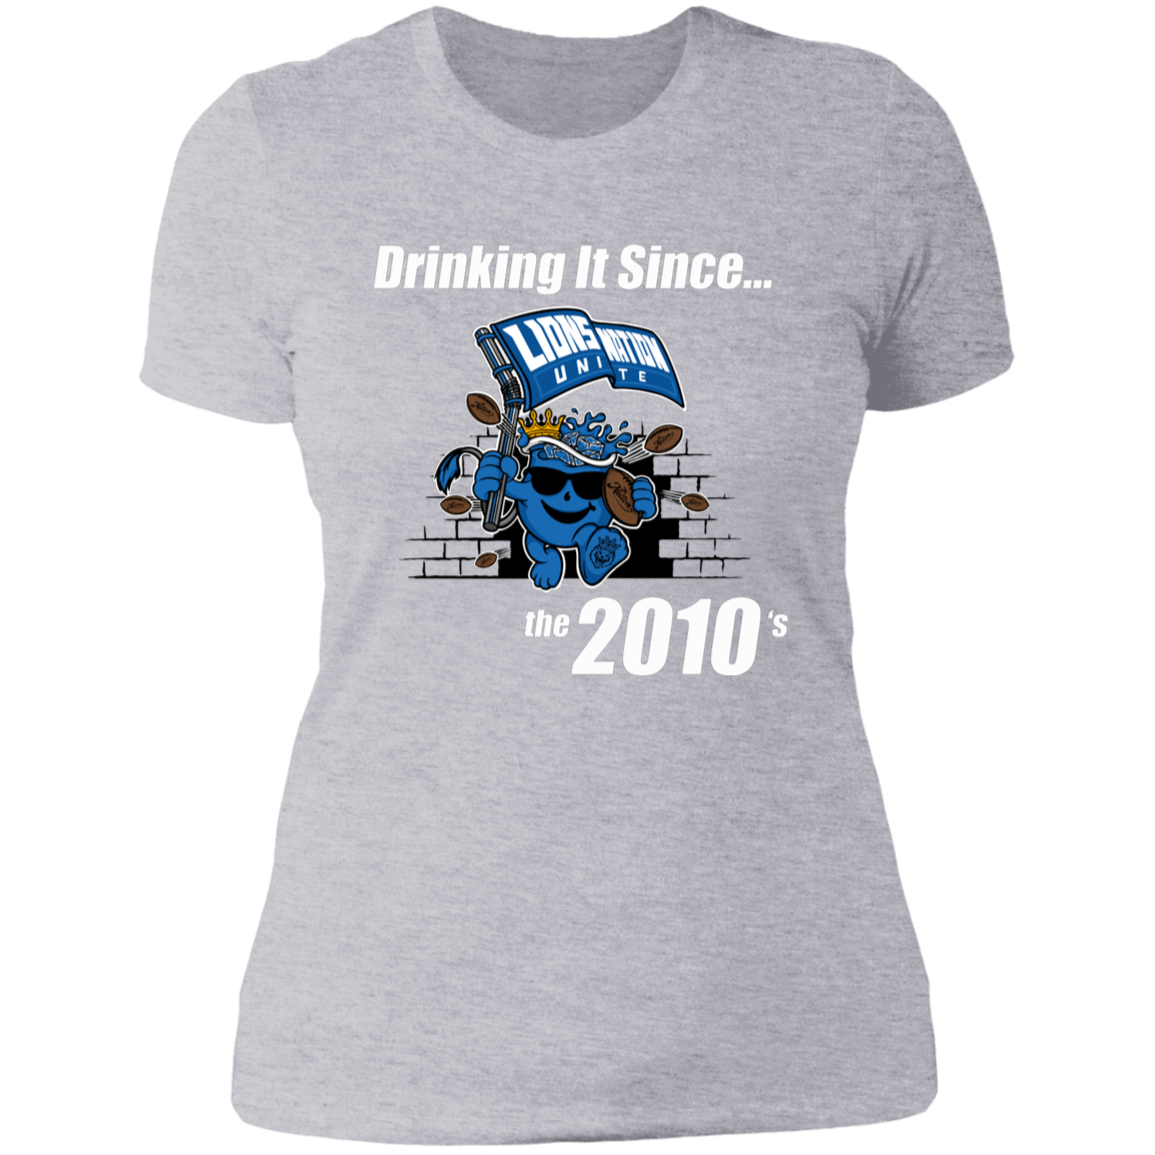 Drinking It Since the 2010's Women's T-Shirt